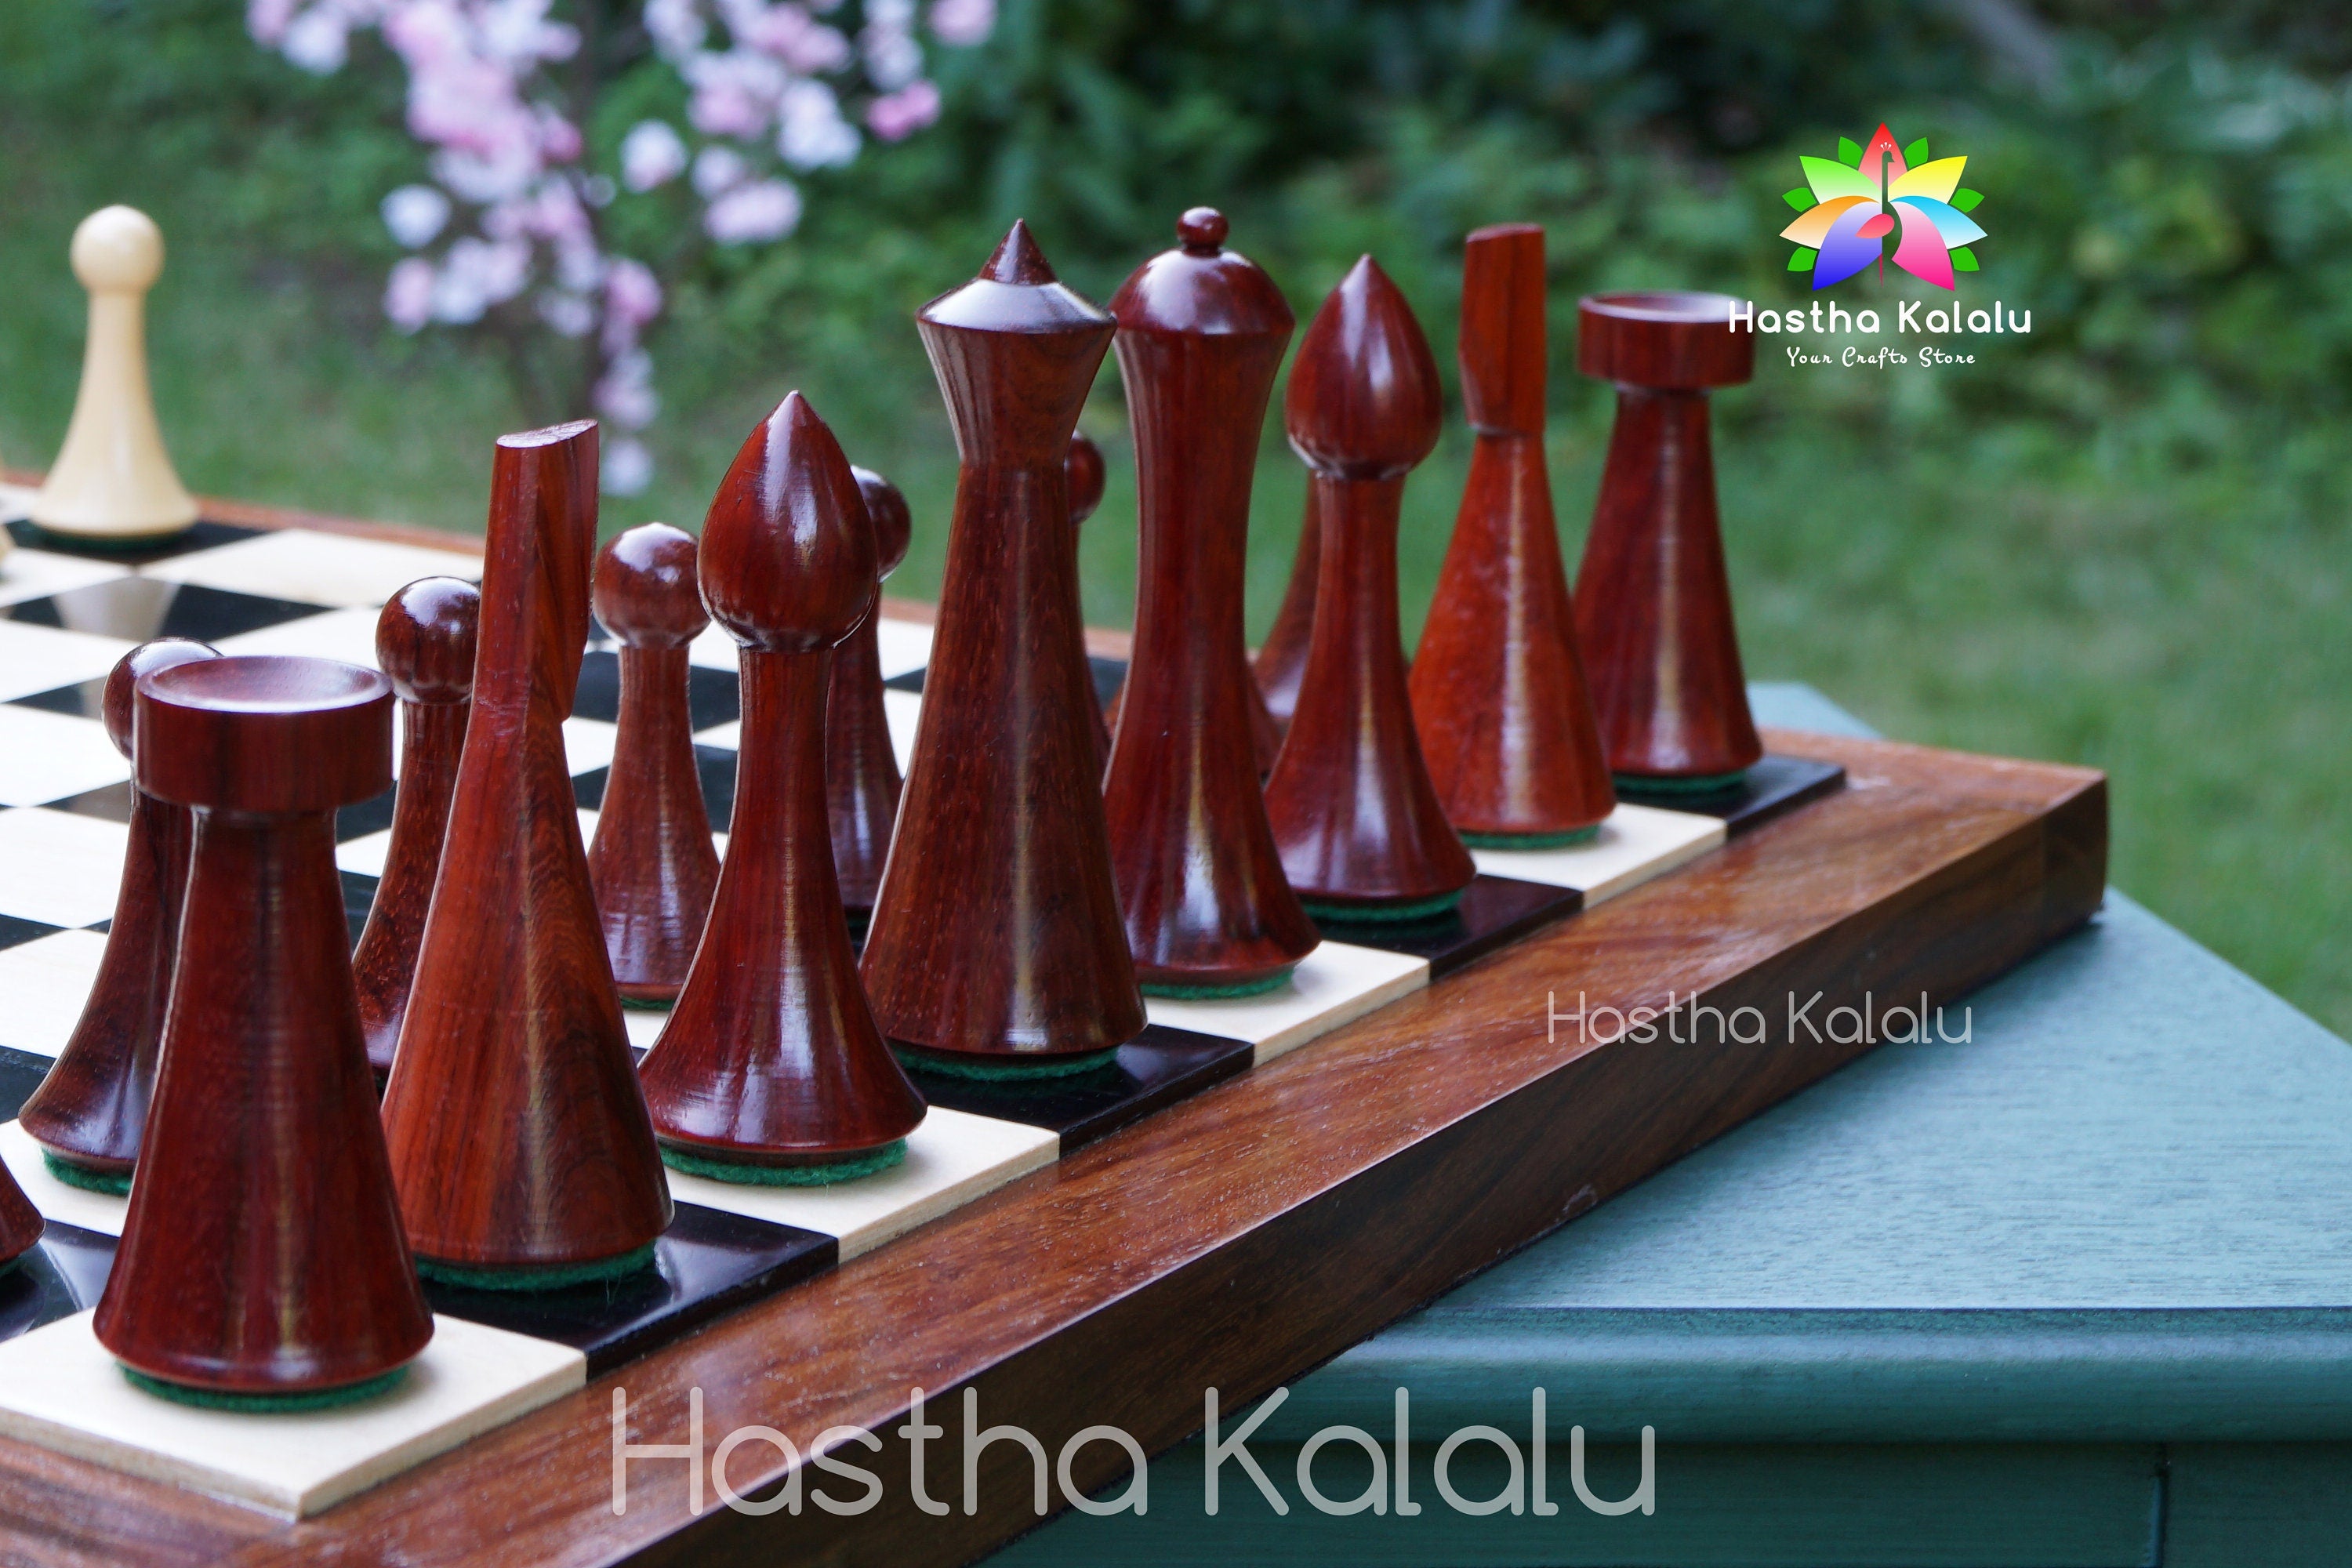 Combo Chess Set | Minimalist Style Modern Design Hermann Ohme Padauk Wood Chess Set with Endgrain Ebony Board